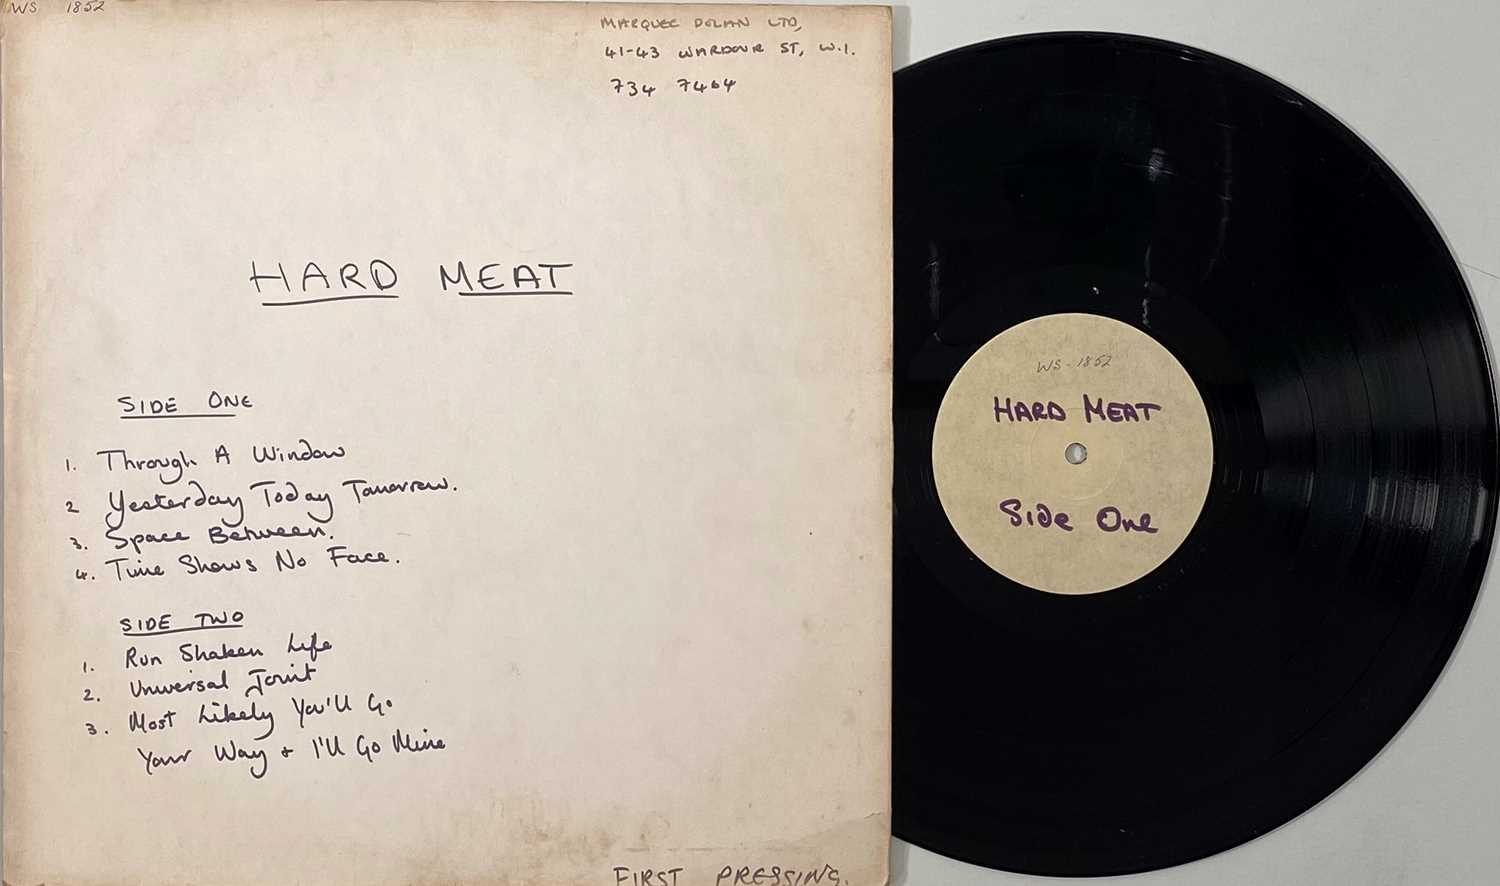 HARD MEAT - HARD MEAT LP - ORIGINAL UK WHITE LABEL TEST PRESSING (WARNER WS 1852)